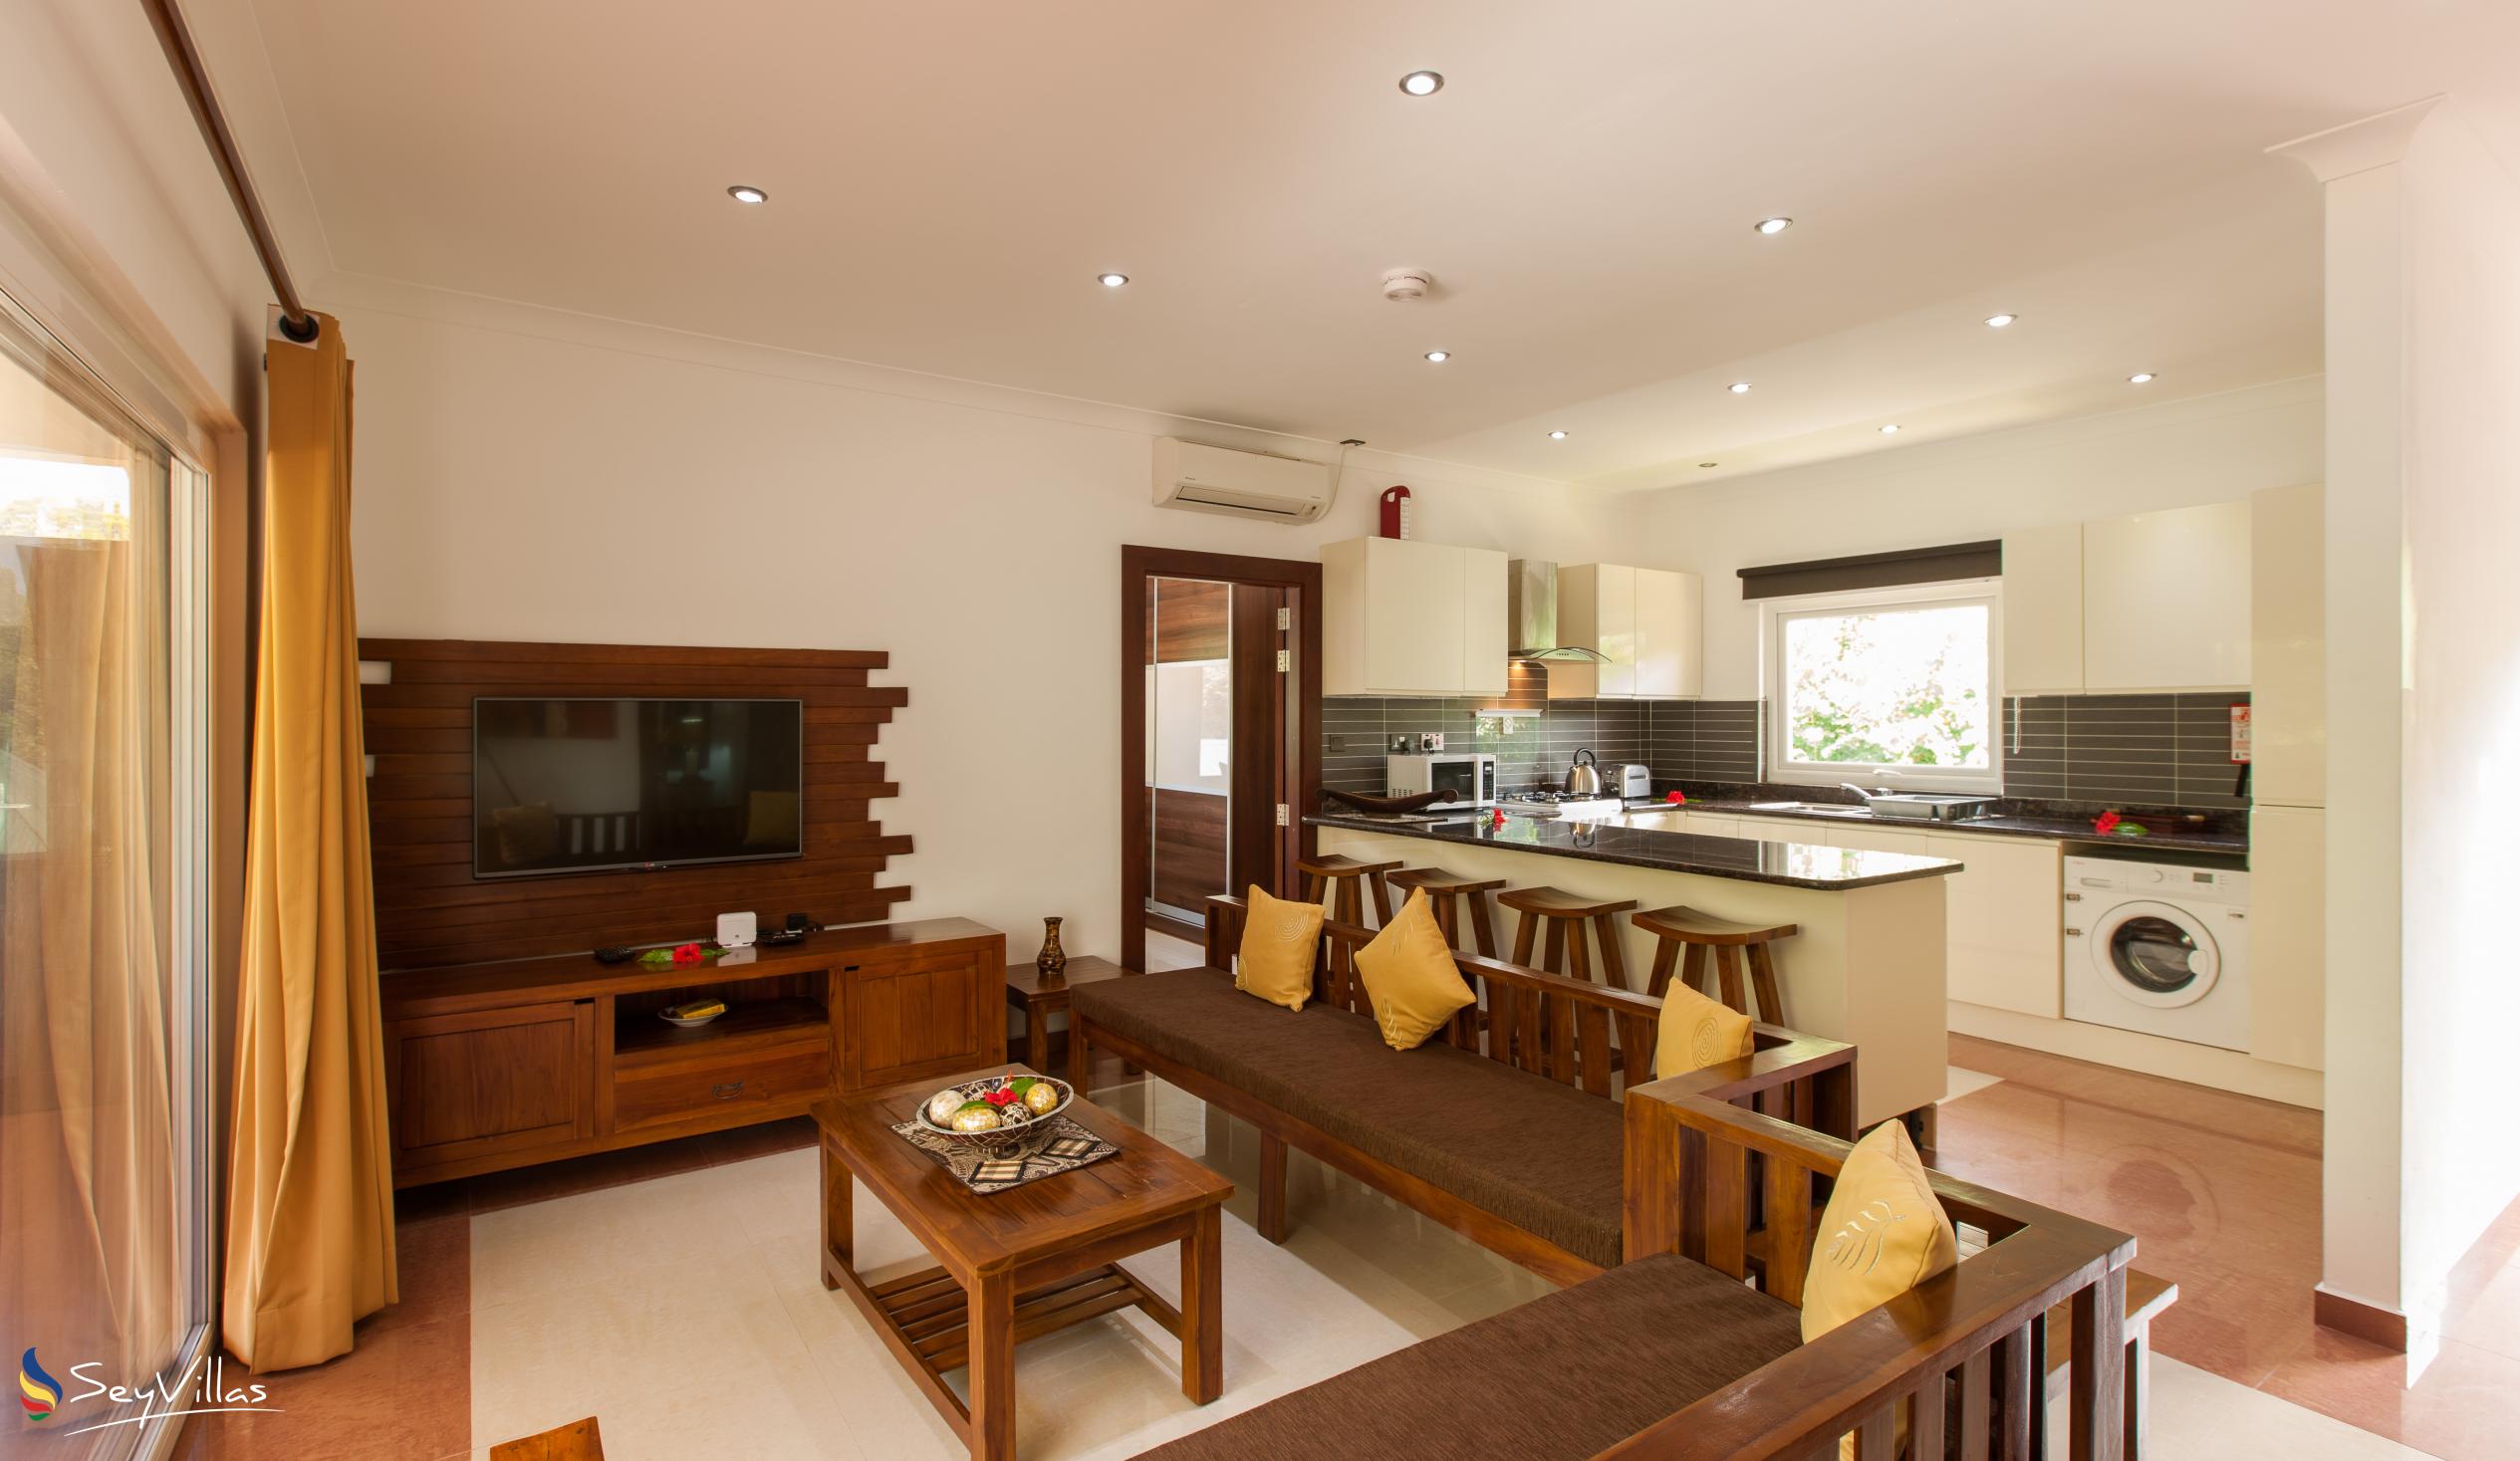 Foto 7: YASAD Luxury Beach Residence - Appartamento con 3 camere da letto - Praslin (Seychelles)